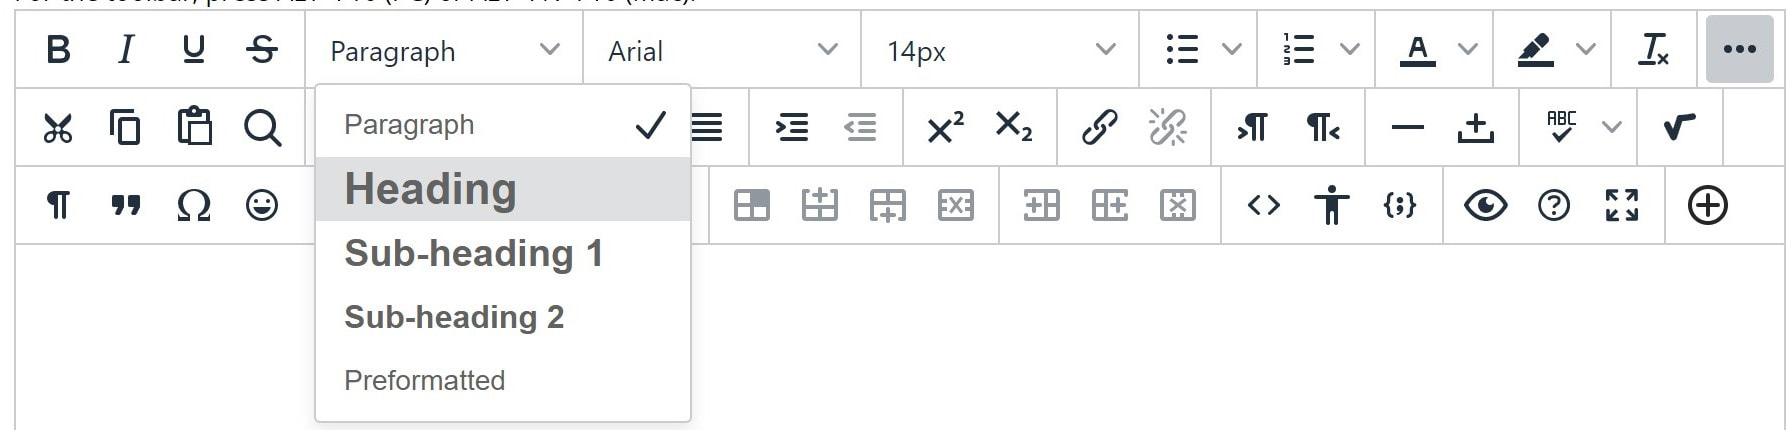 Blackboard toolbar with heading level menu visible